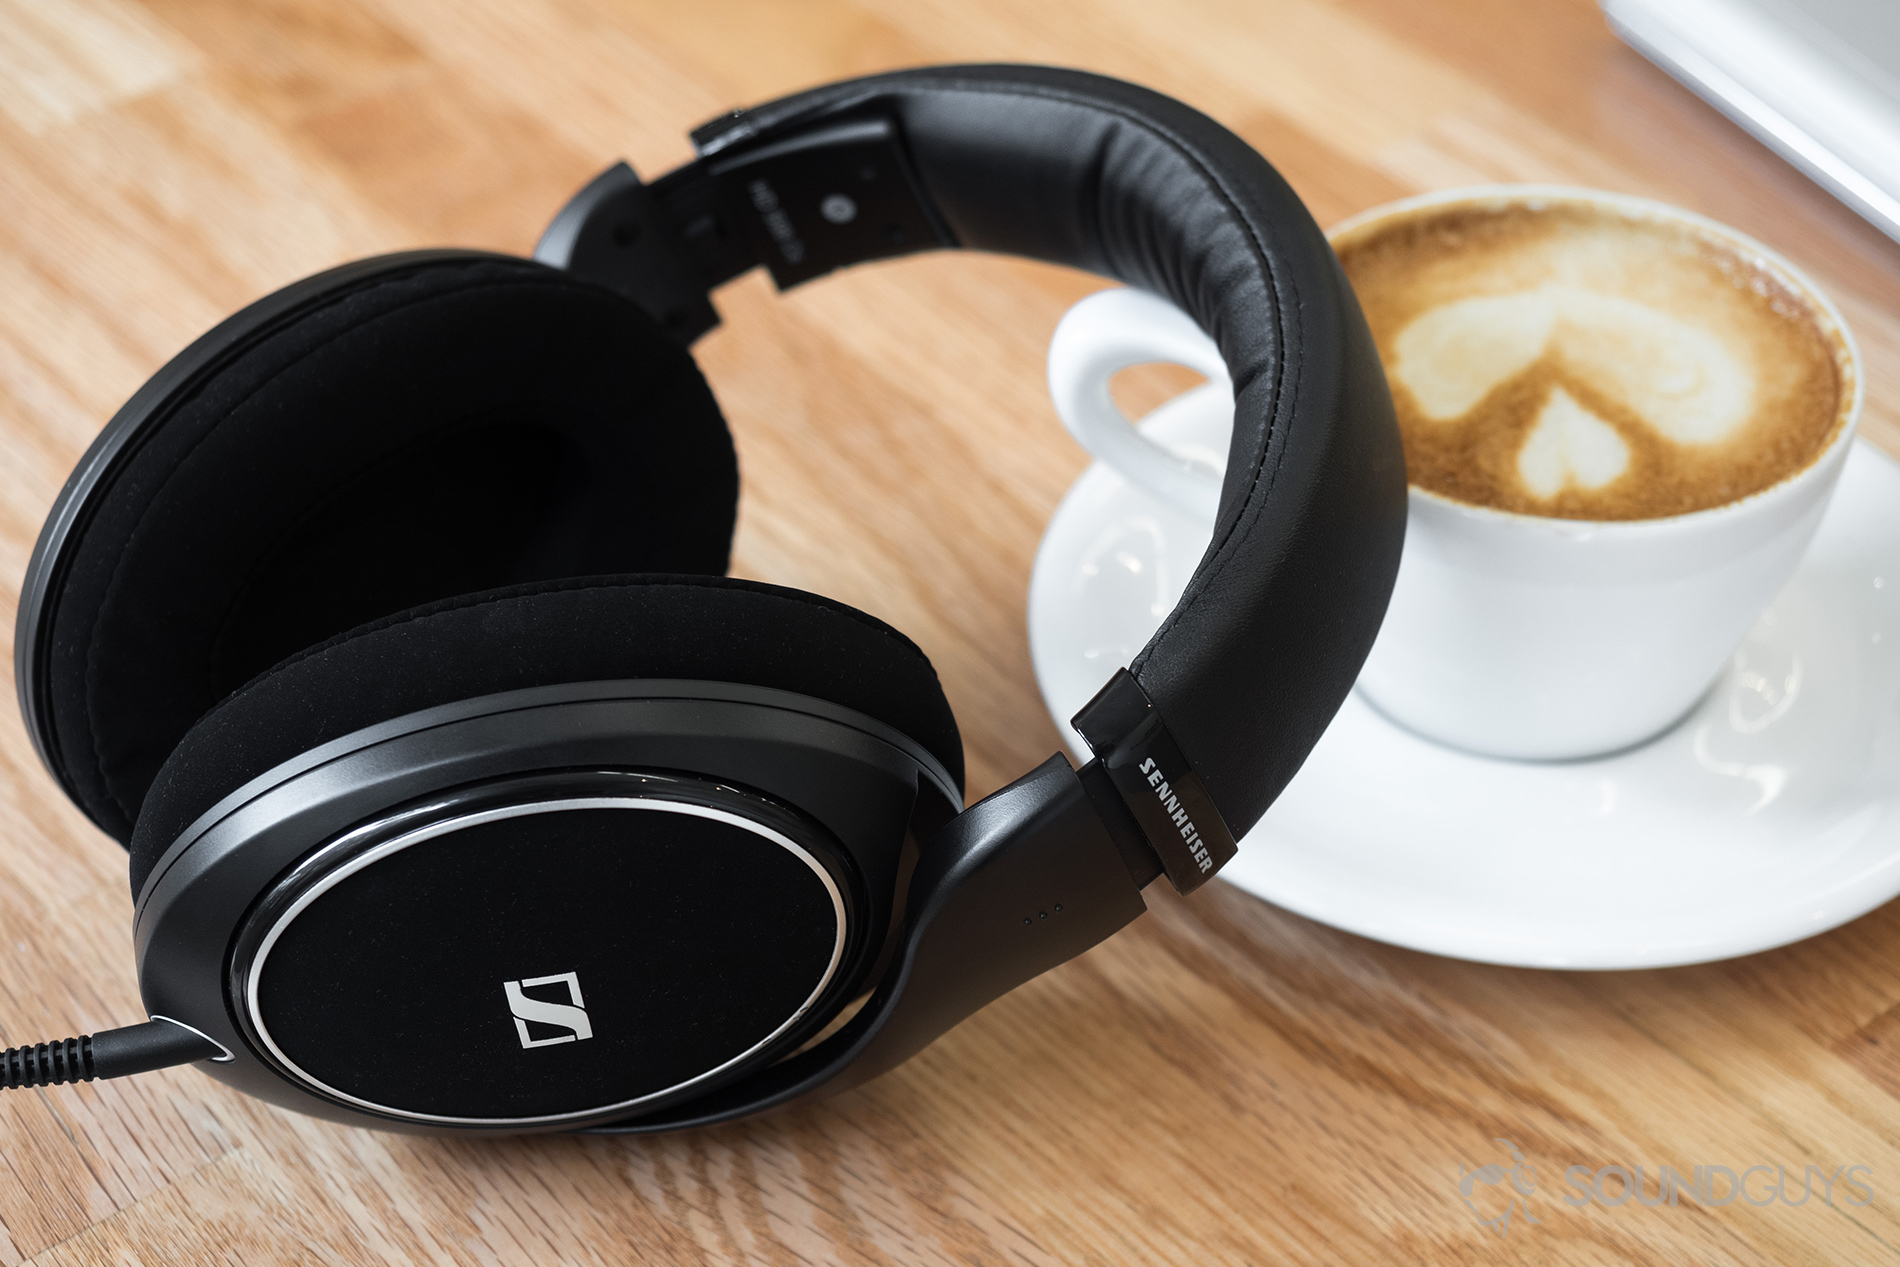 Samsung Galaxy S10 headphone: Sennheiser HD 598 CS headphones leaning against a latte on a wooden table.